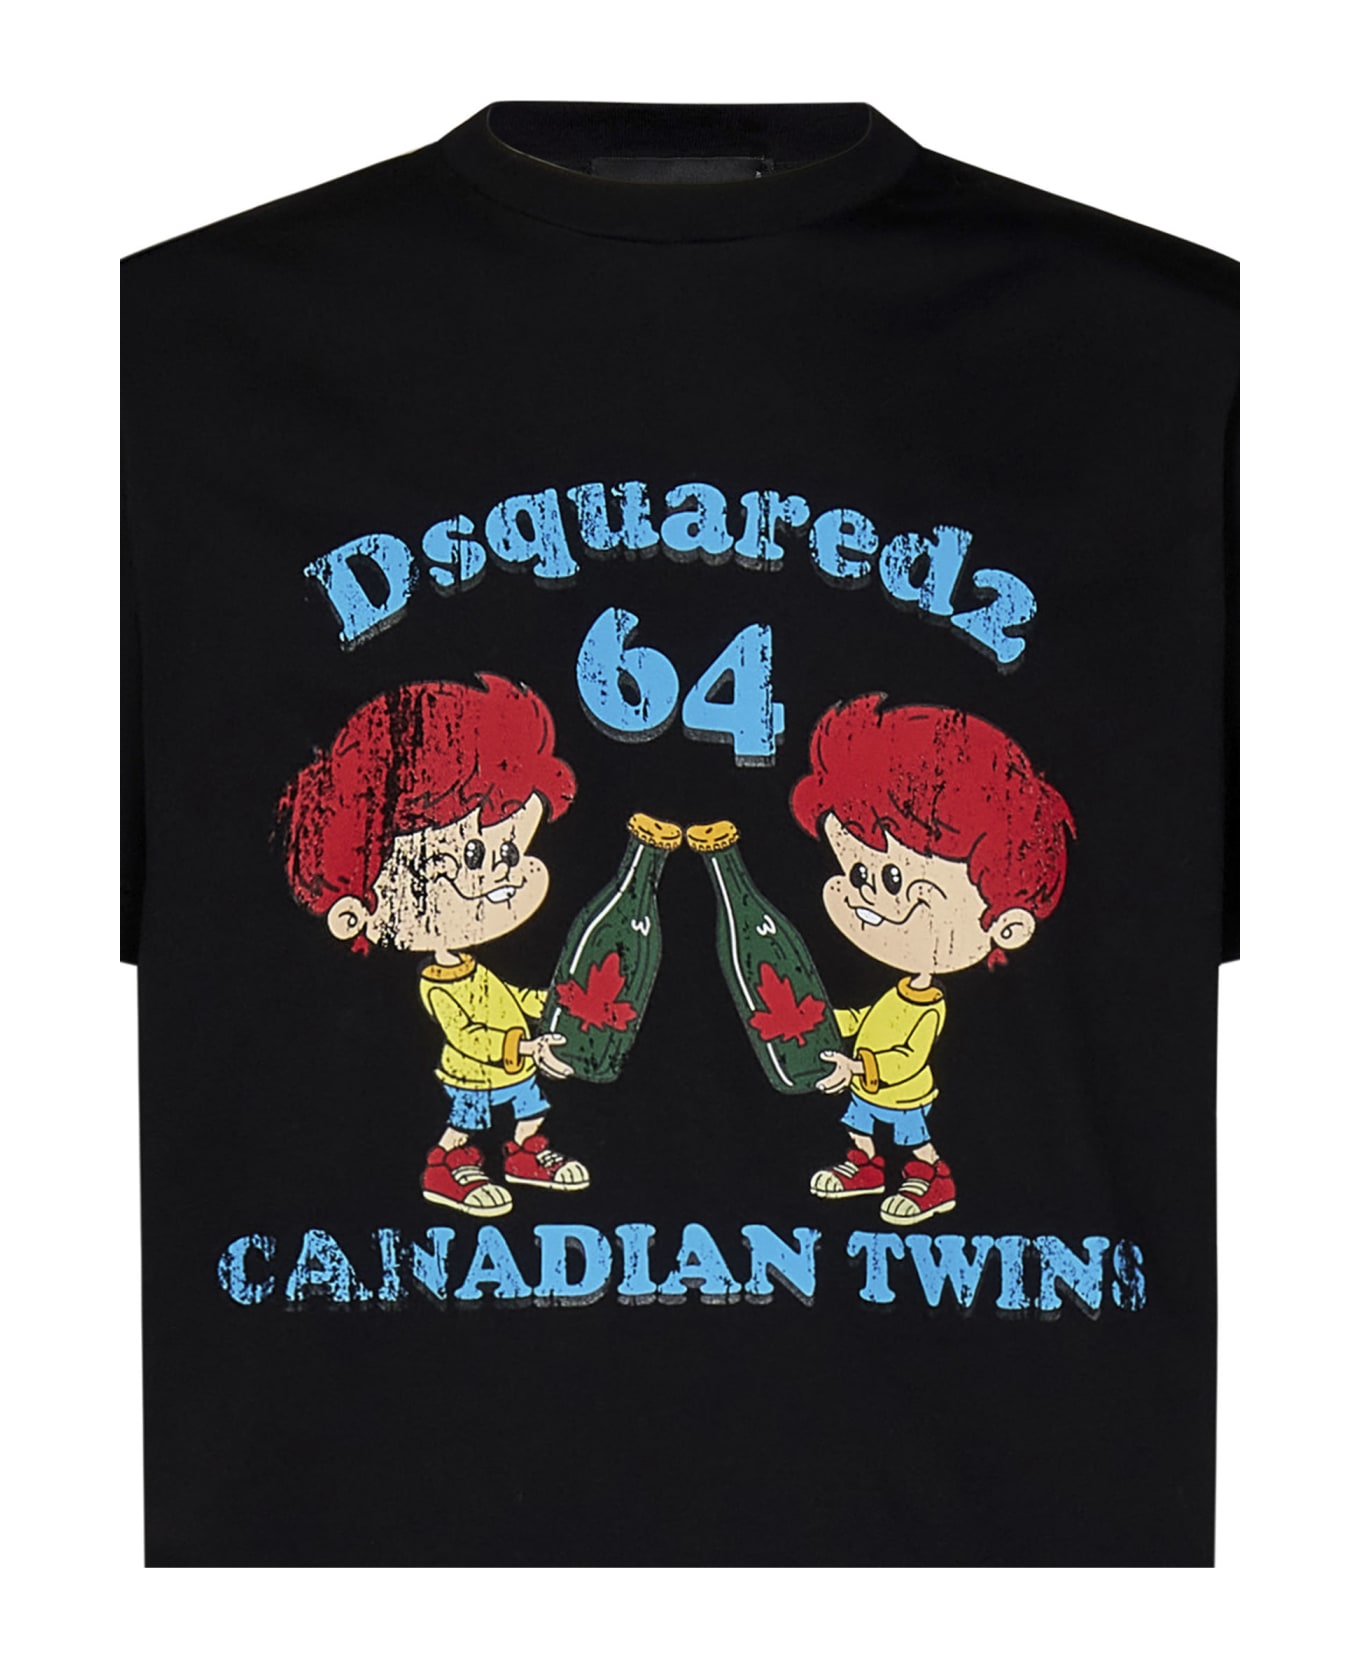 Dsquared2 Canadian Twins Cool Fit T-shirt - Black